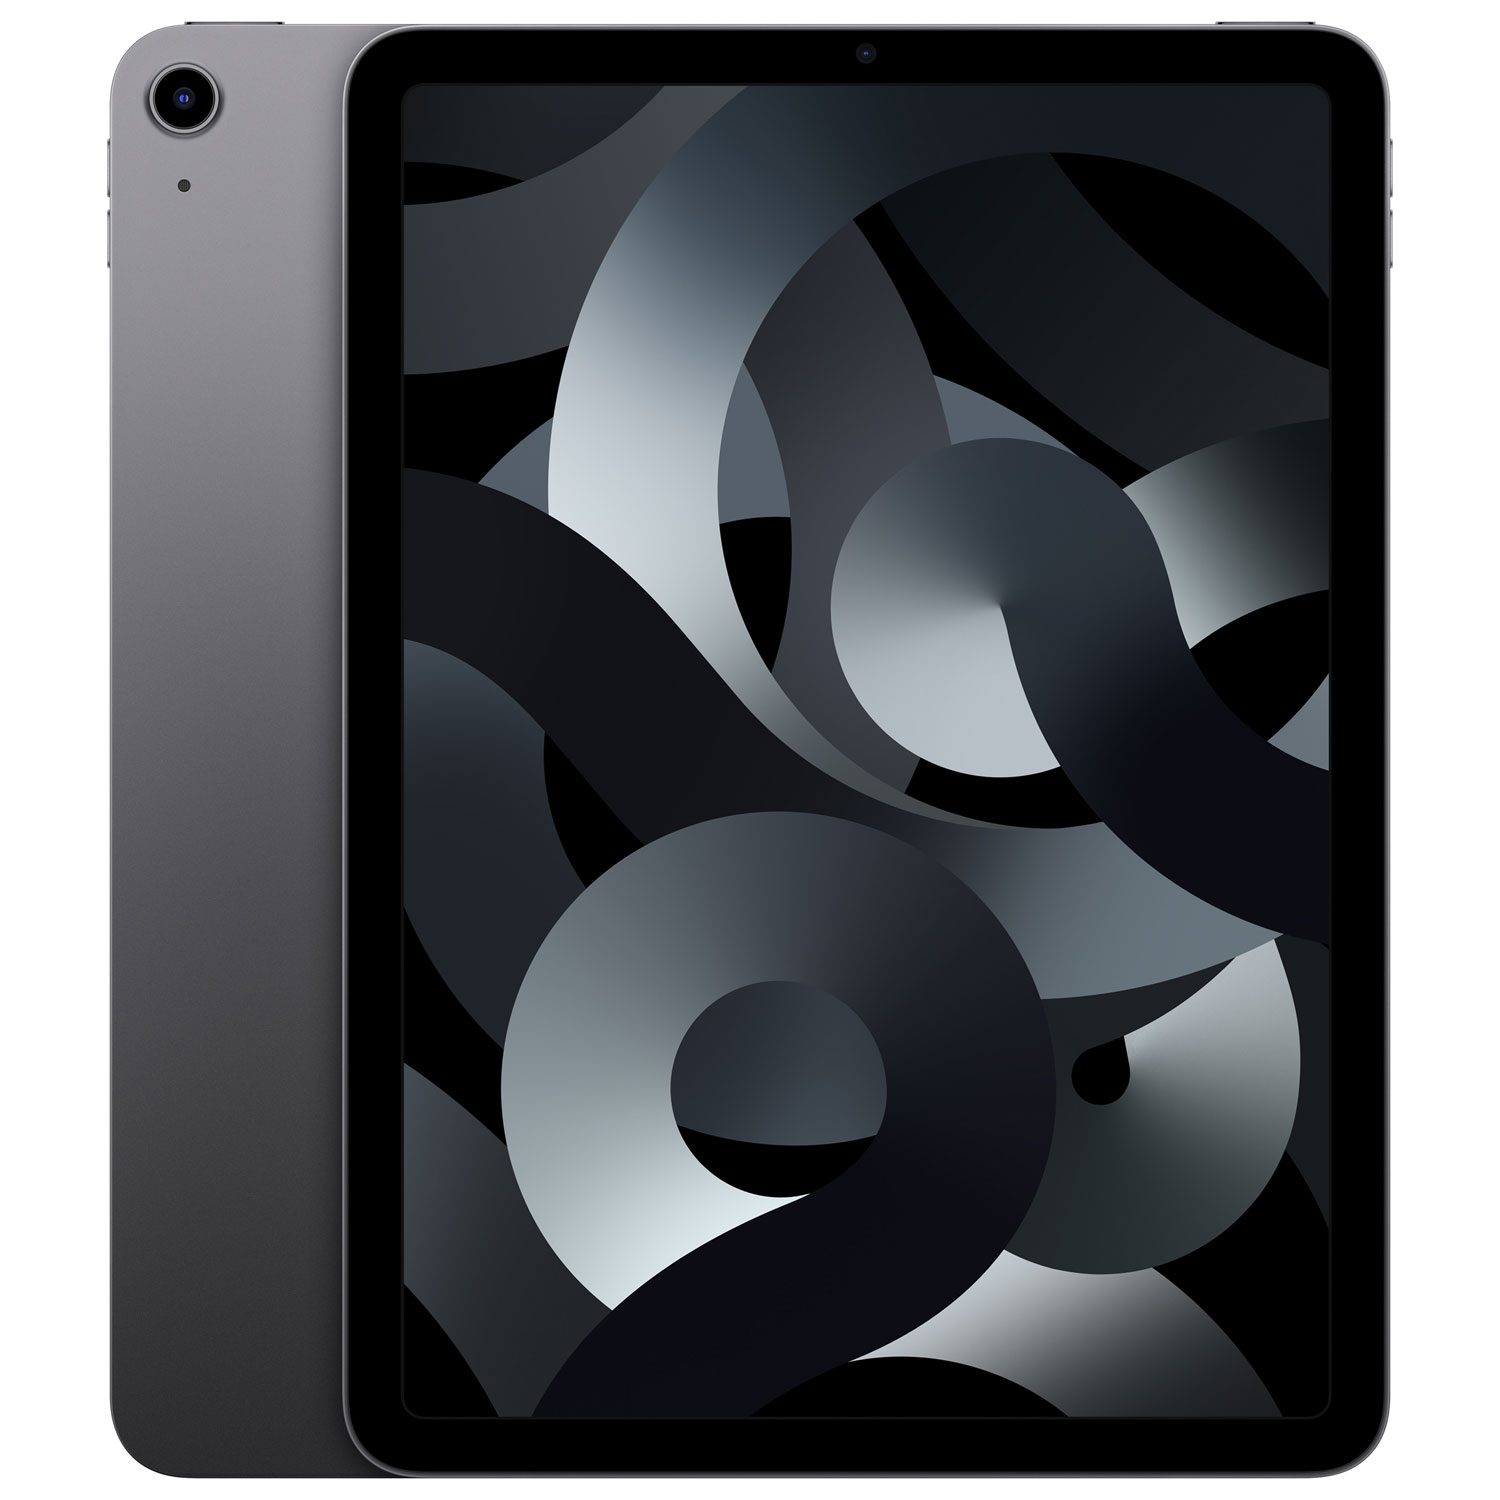 Apple iPad Air 10.9" 64GB with Wi-Fi (5th Generation) - Space Grey